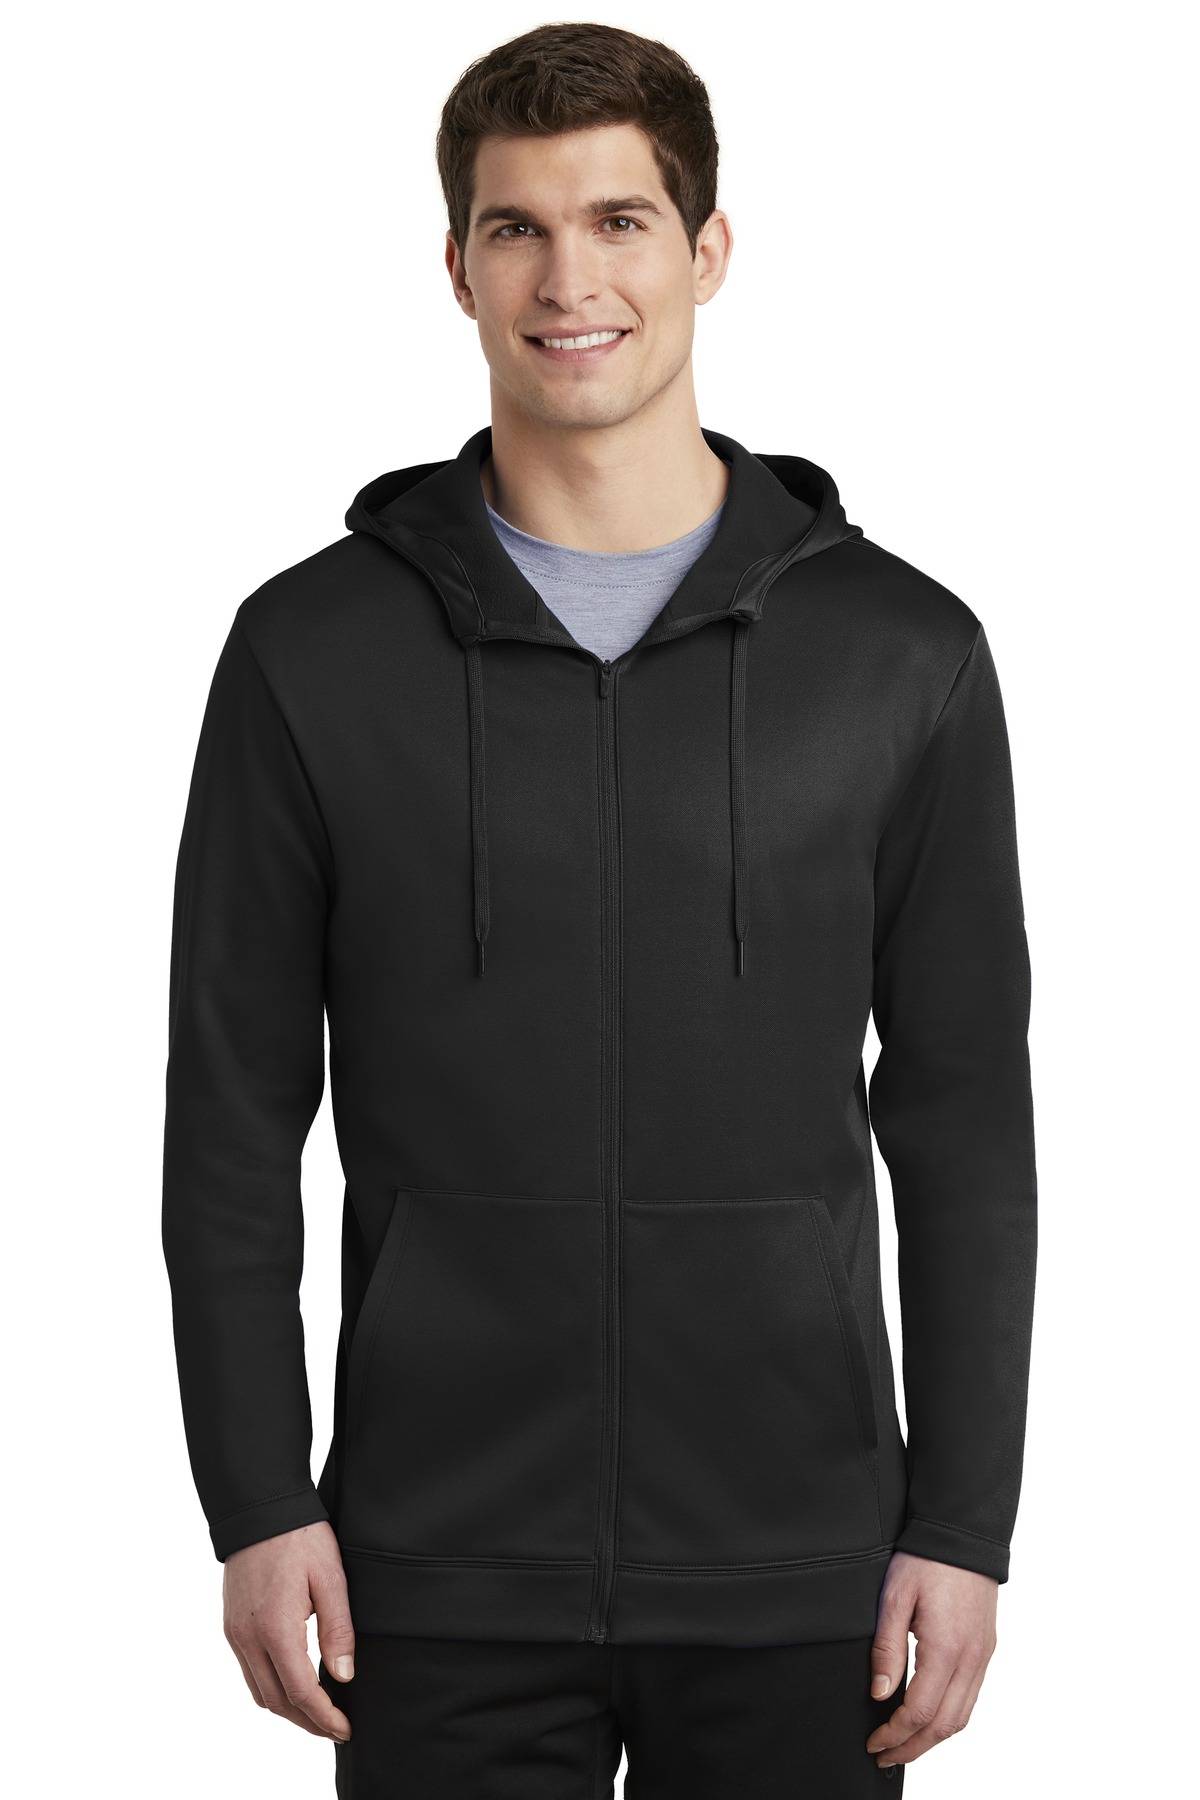 Nike Therma-FIT Full-Zip Fleece Hoodie. NKAH6259 - Custom Shirt Shop